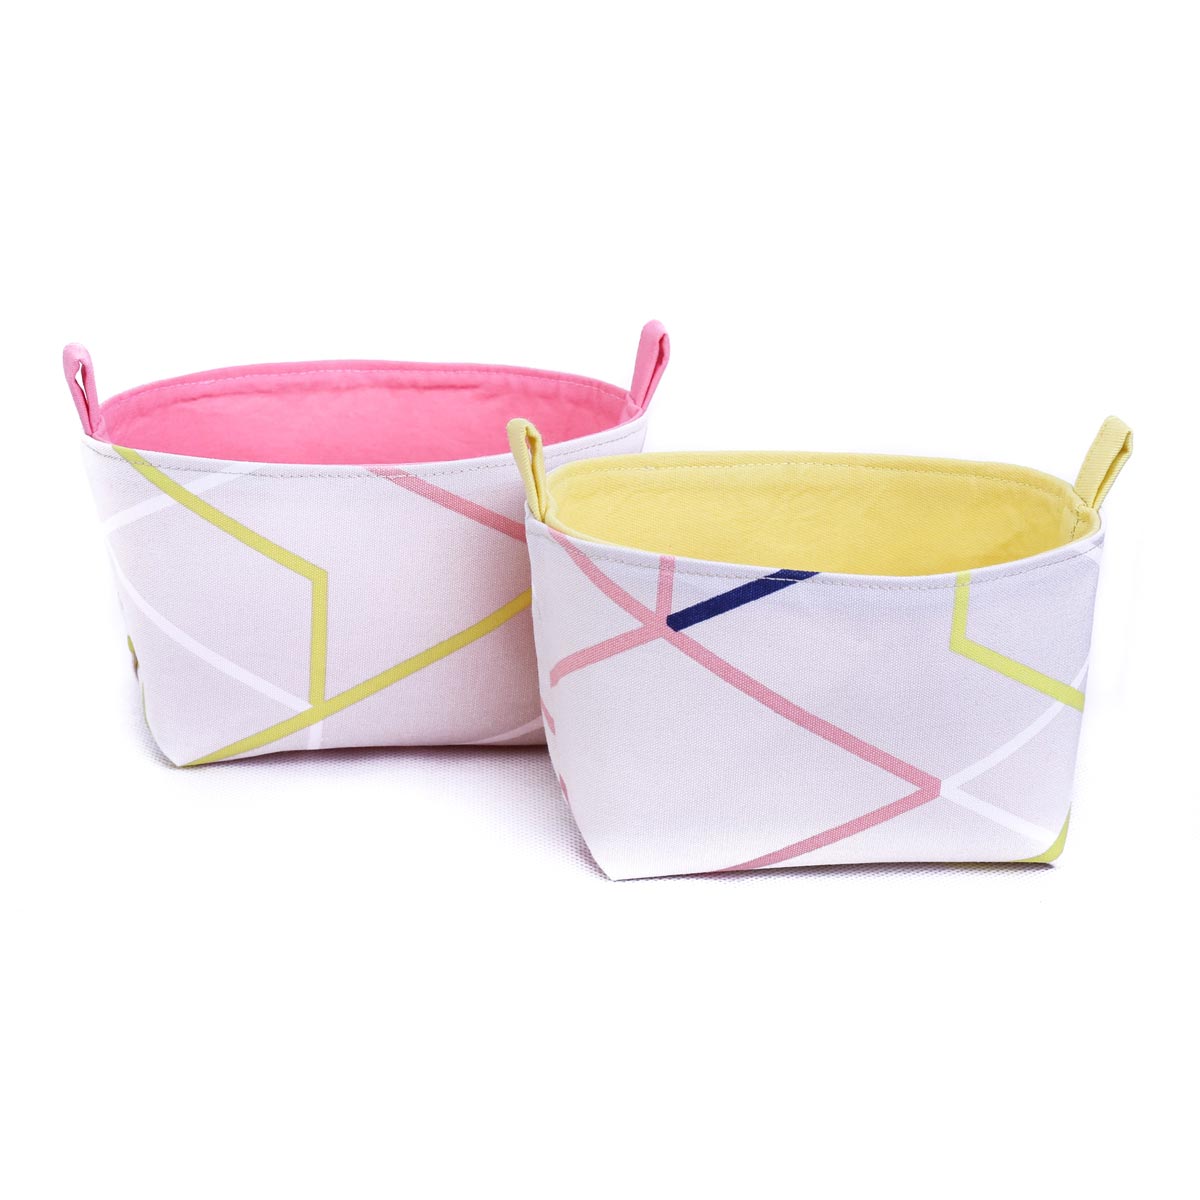 set-of-two-small-storage-baskets-pink-yellow-geometric-neutral-decor-mimi-handmade-australia